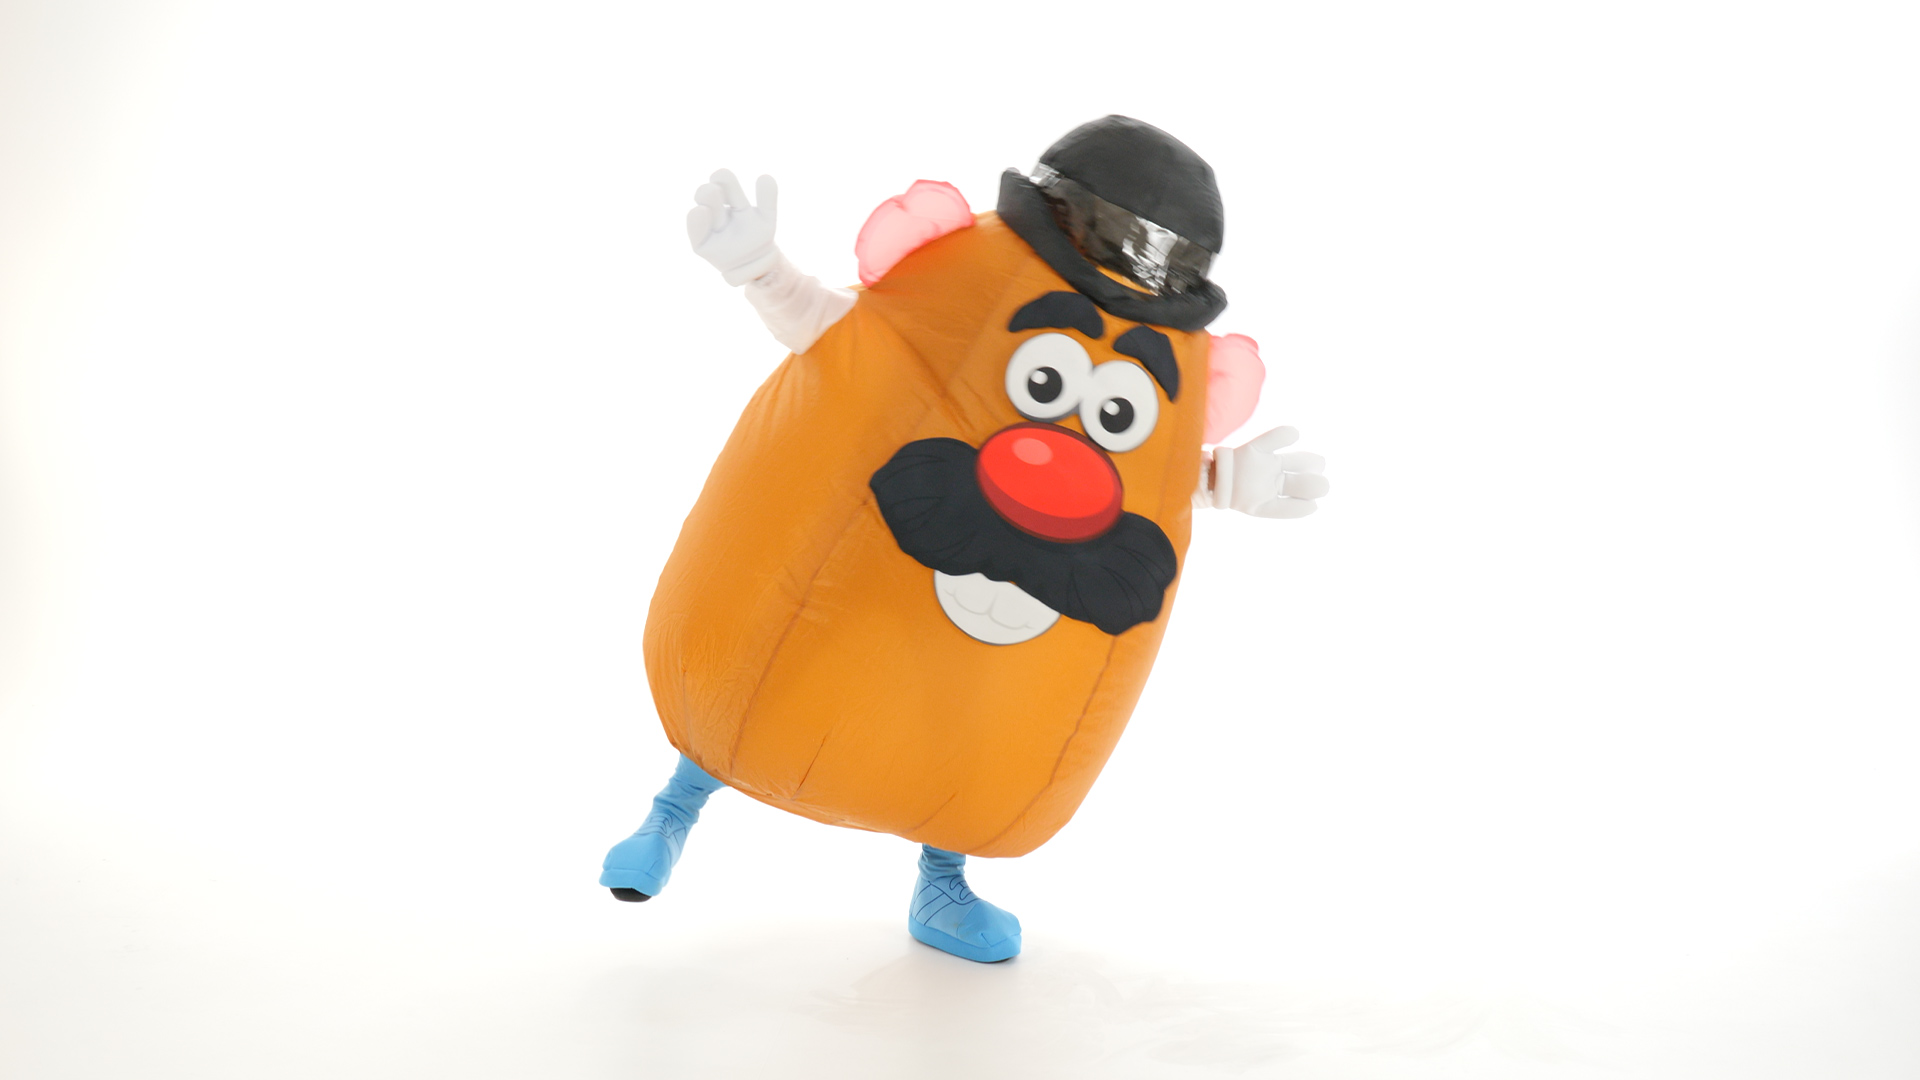 Inflatable Mr Potato Head